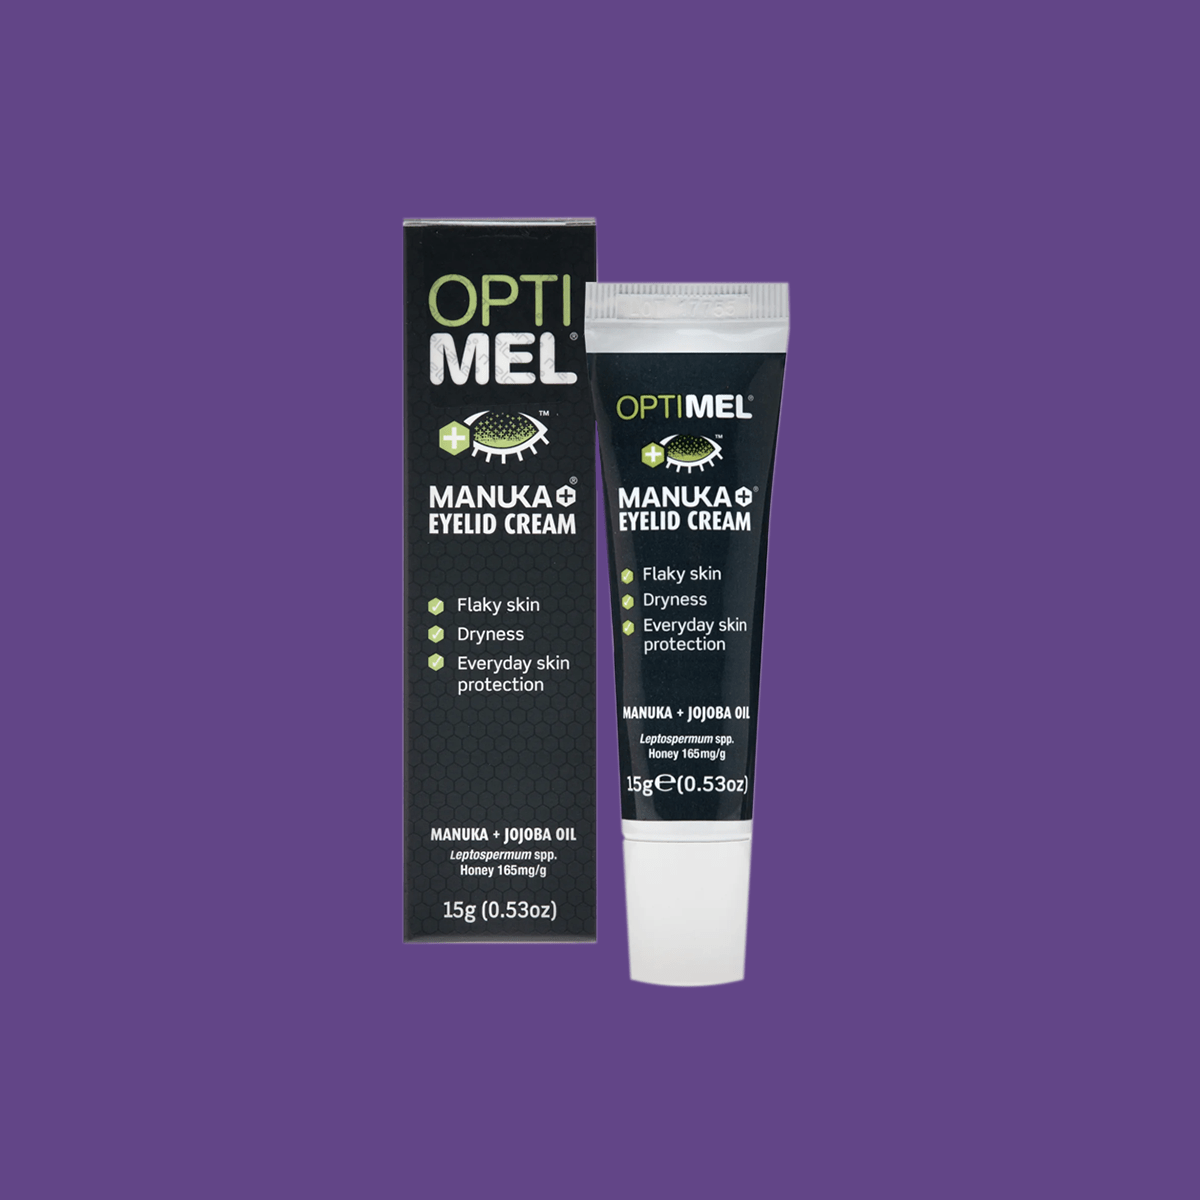 Optimel Manuka Eyelid Cream for Dry Flaky Skin, Conditioner (15g) - Dryeye Rescue